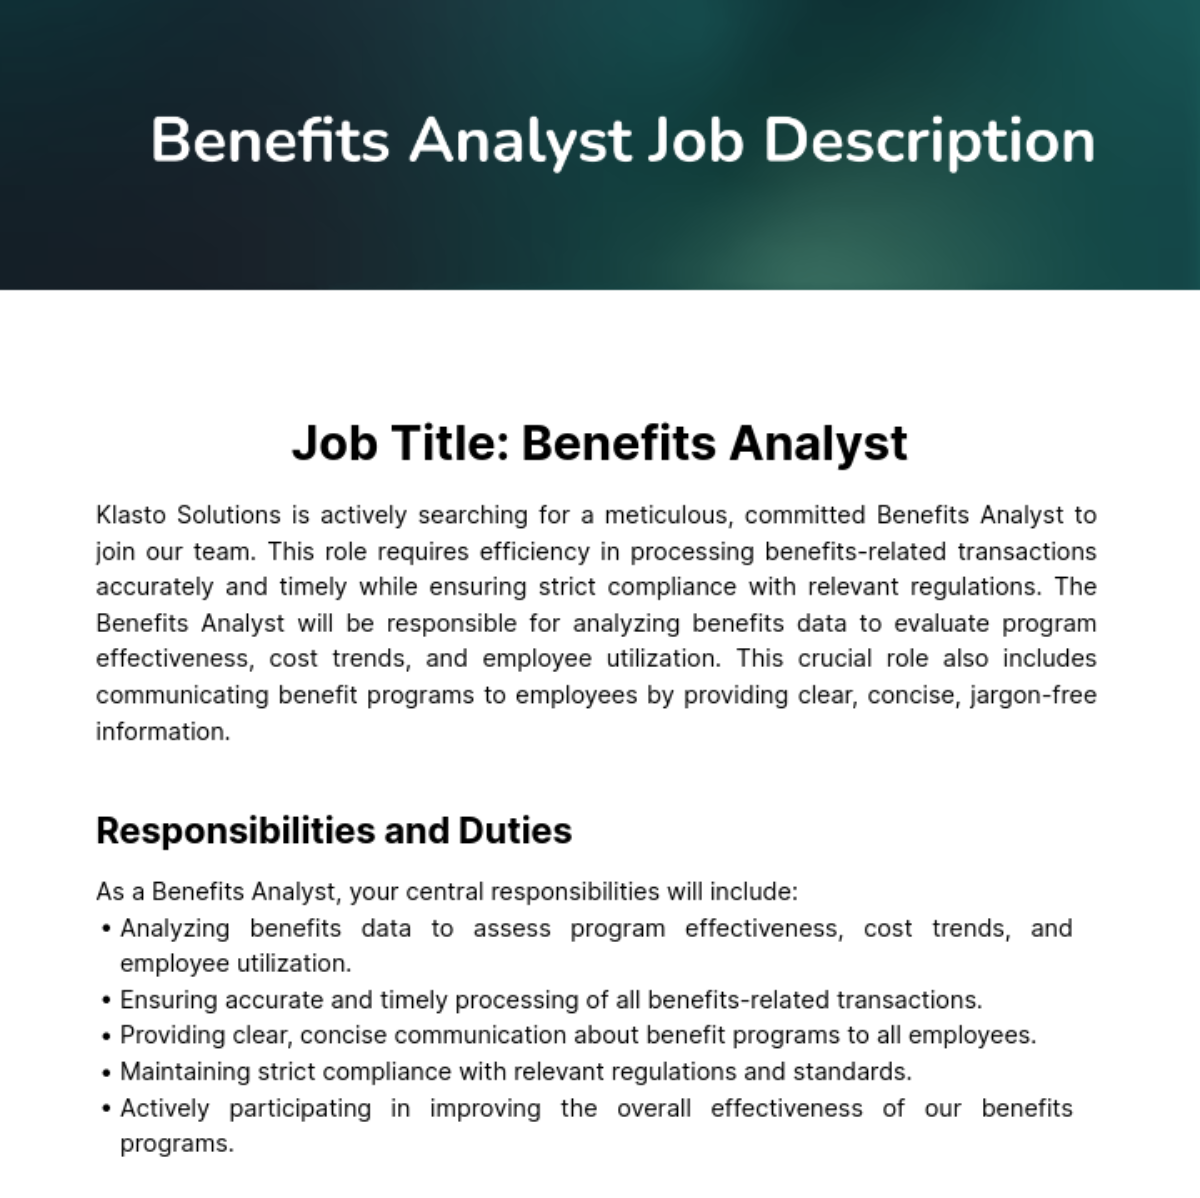 Benefits Analyst Job Description Template